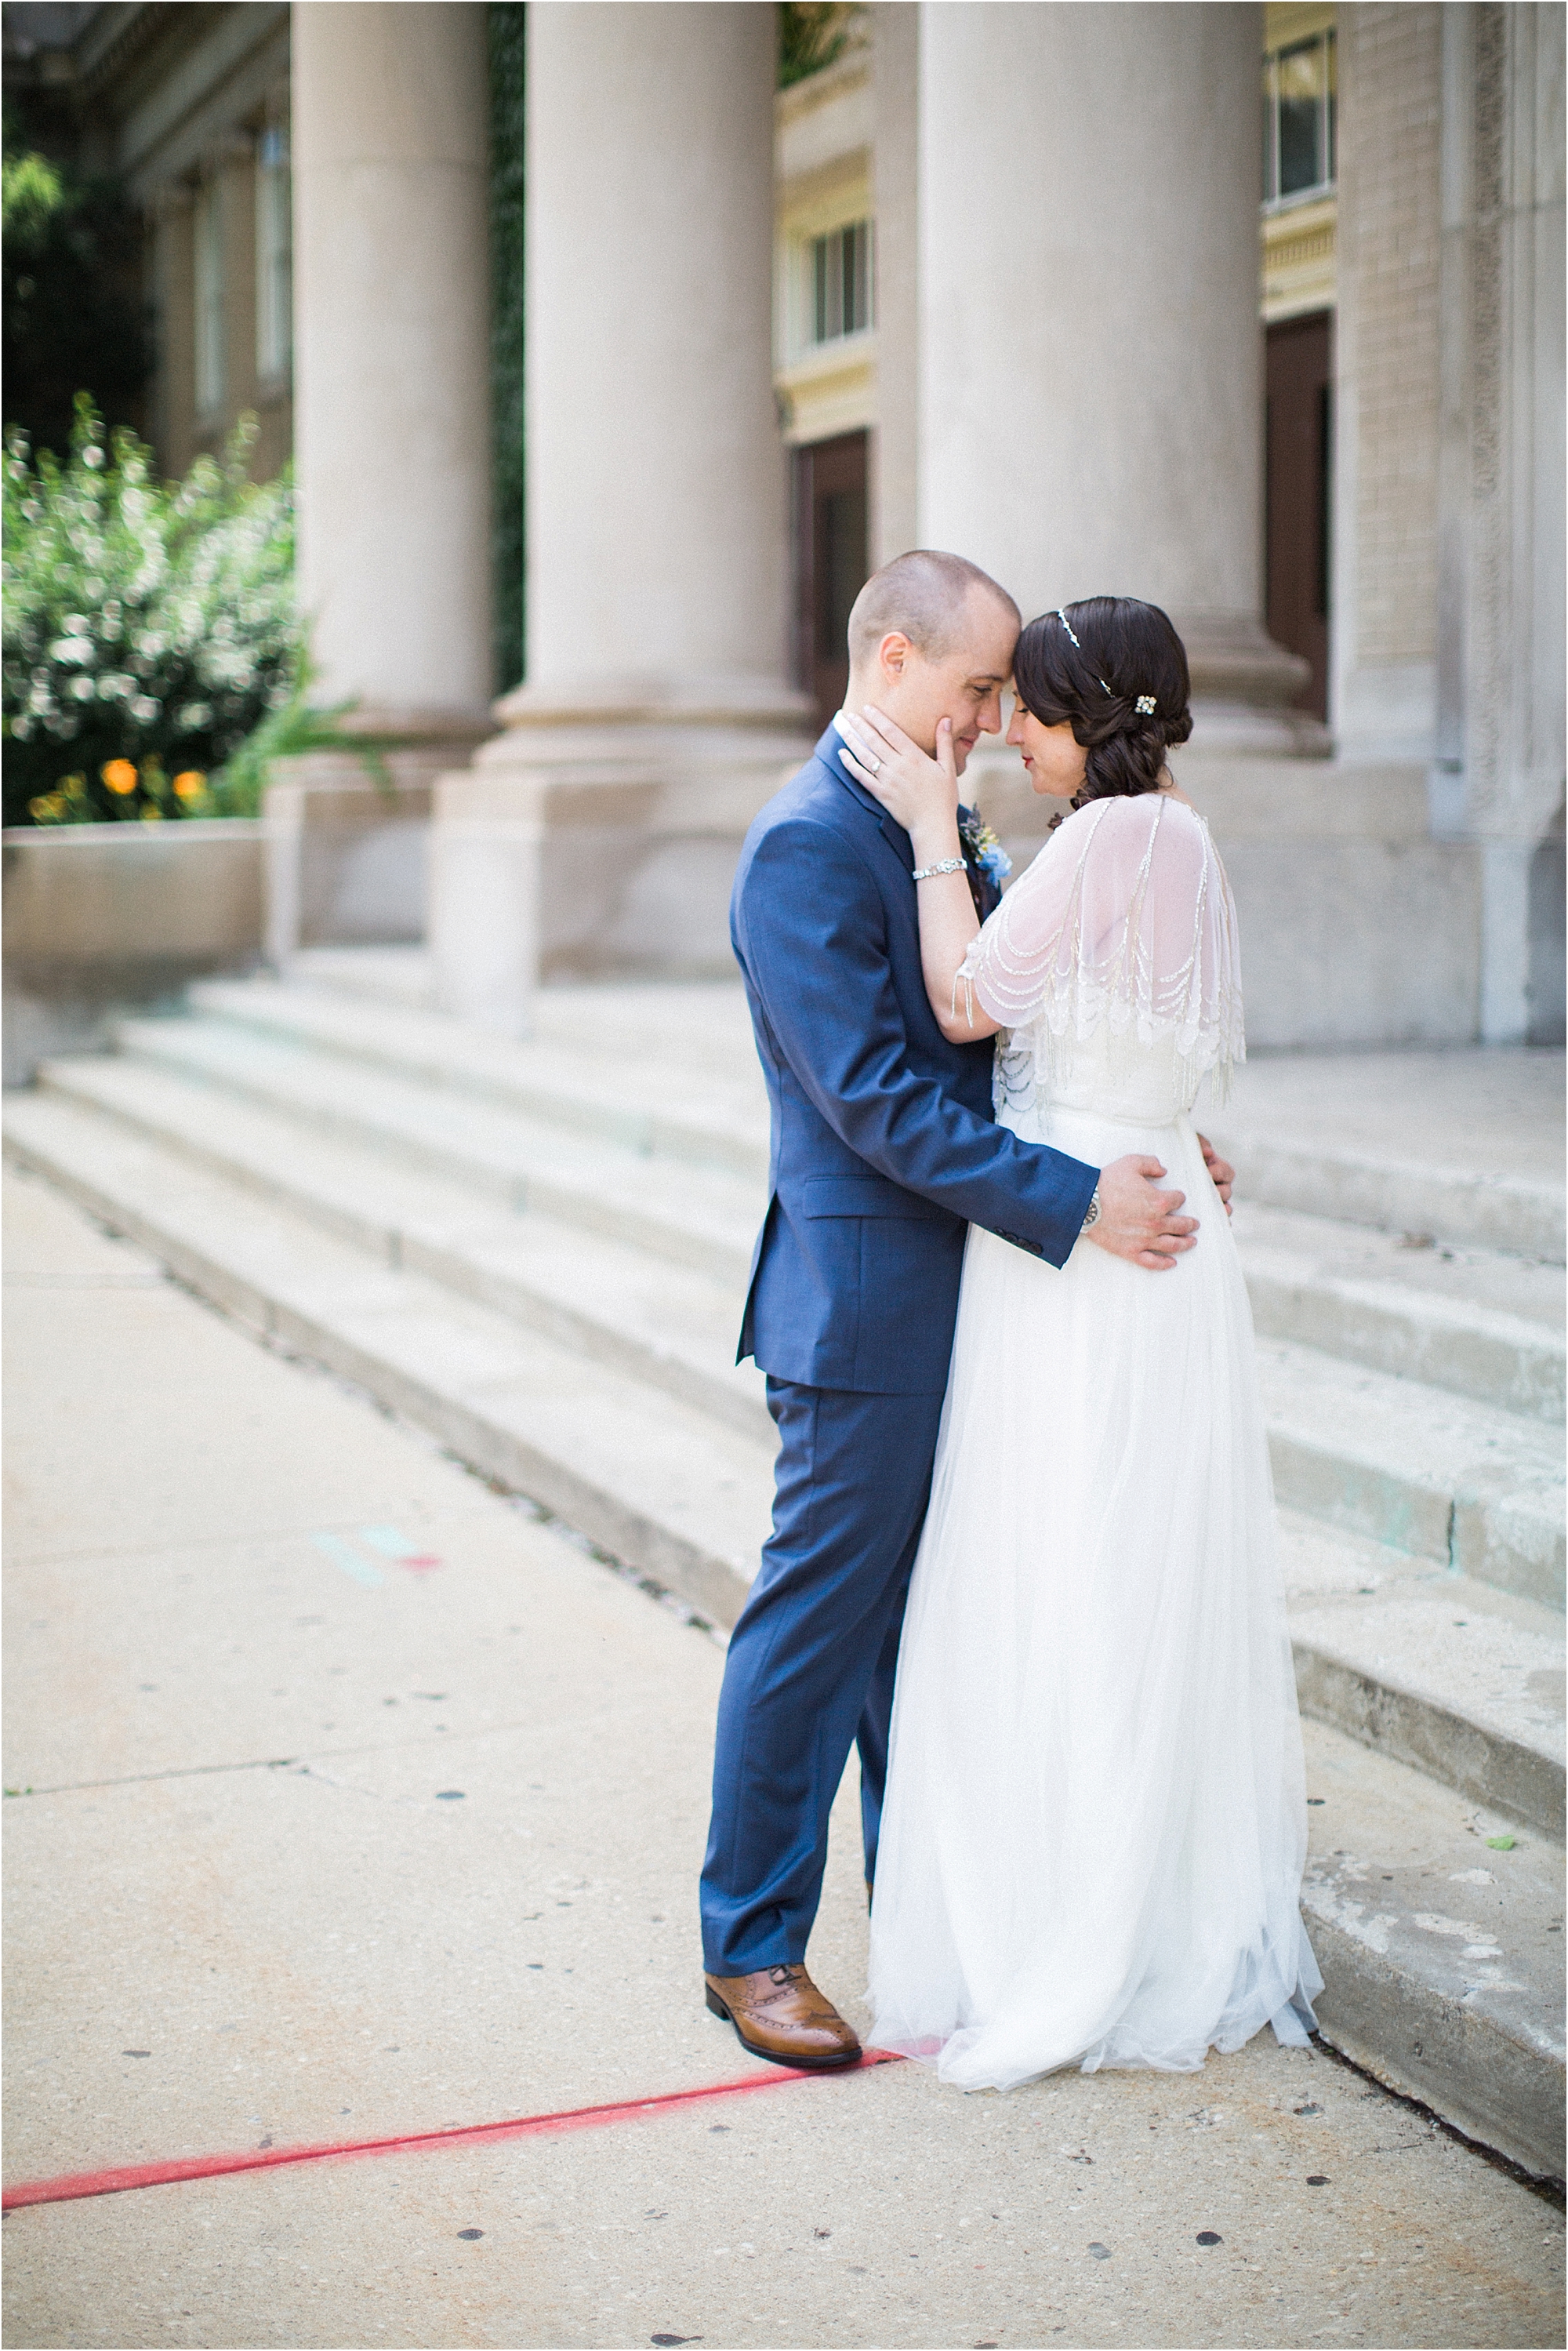 Nicole + Steve's Wedding // July 18, 2015